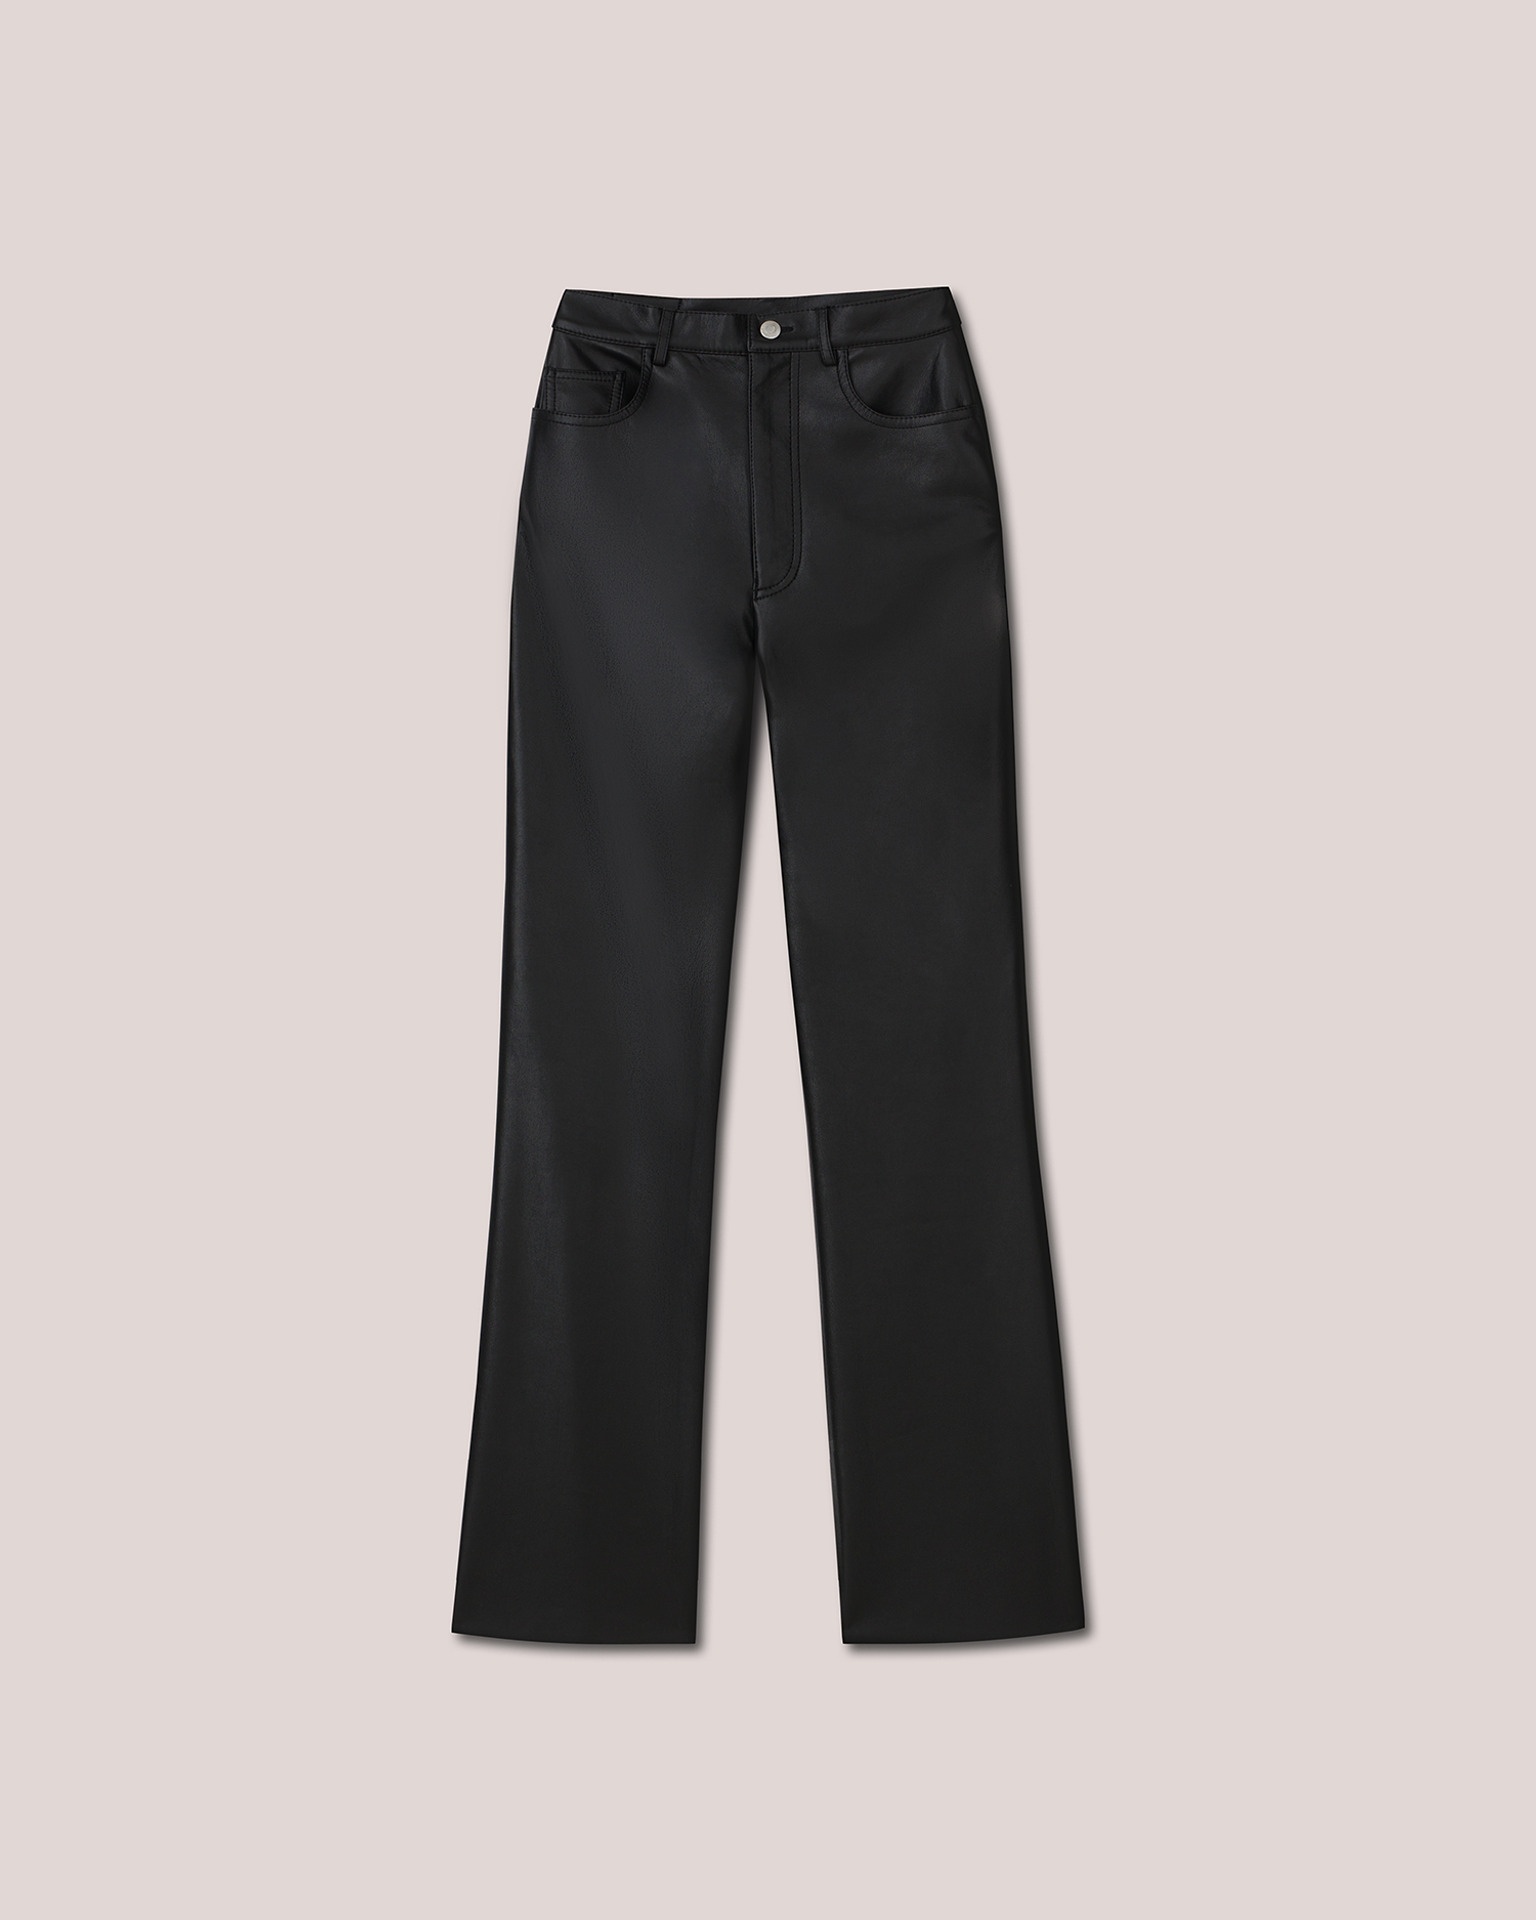 CAMMA - Straight leg trousers - Black - 1